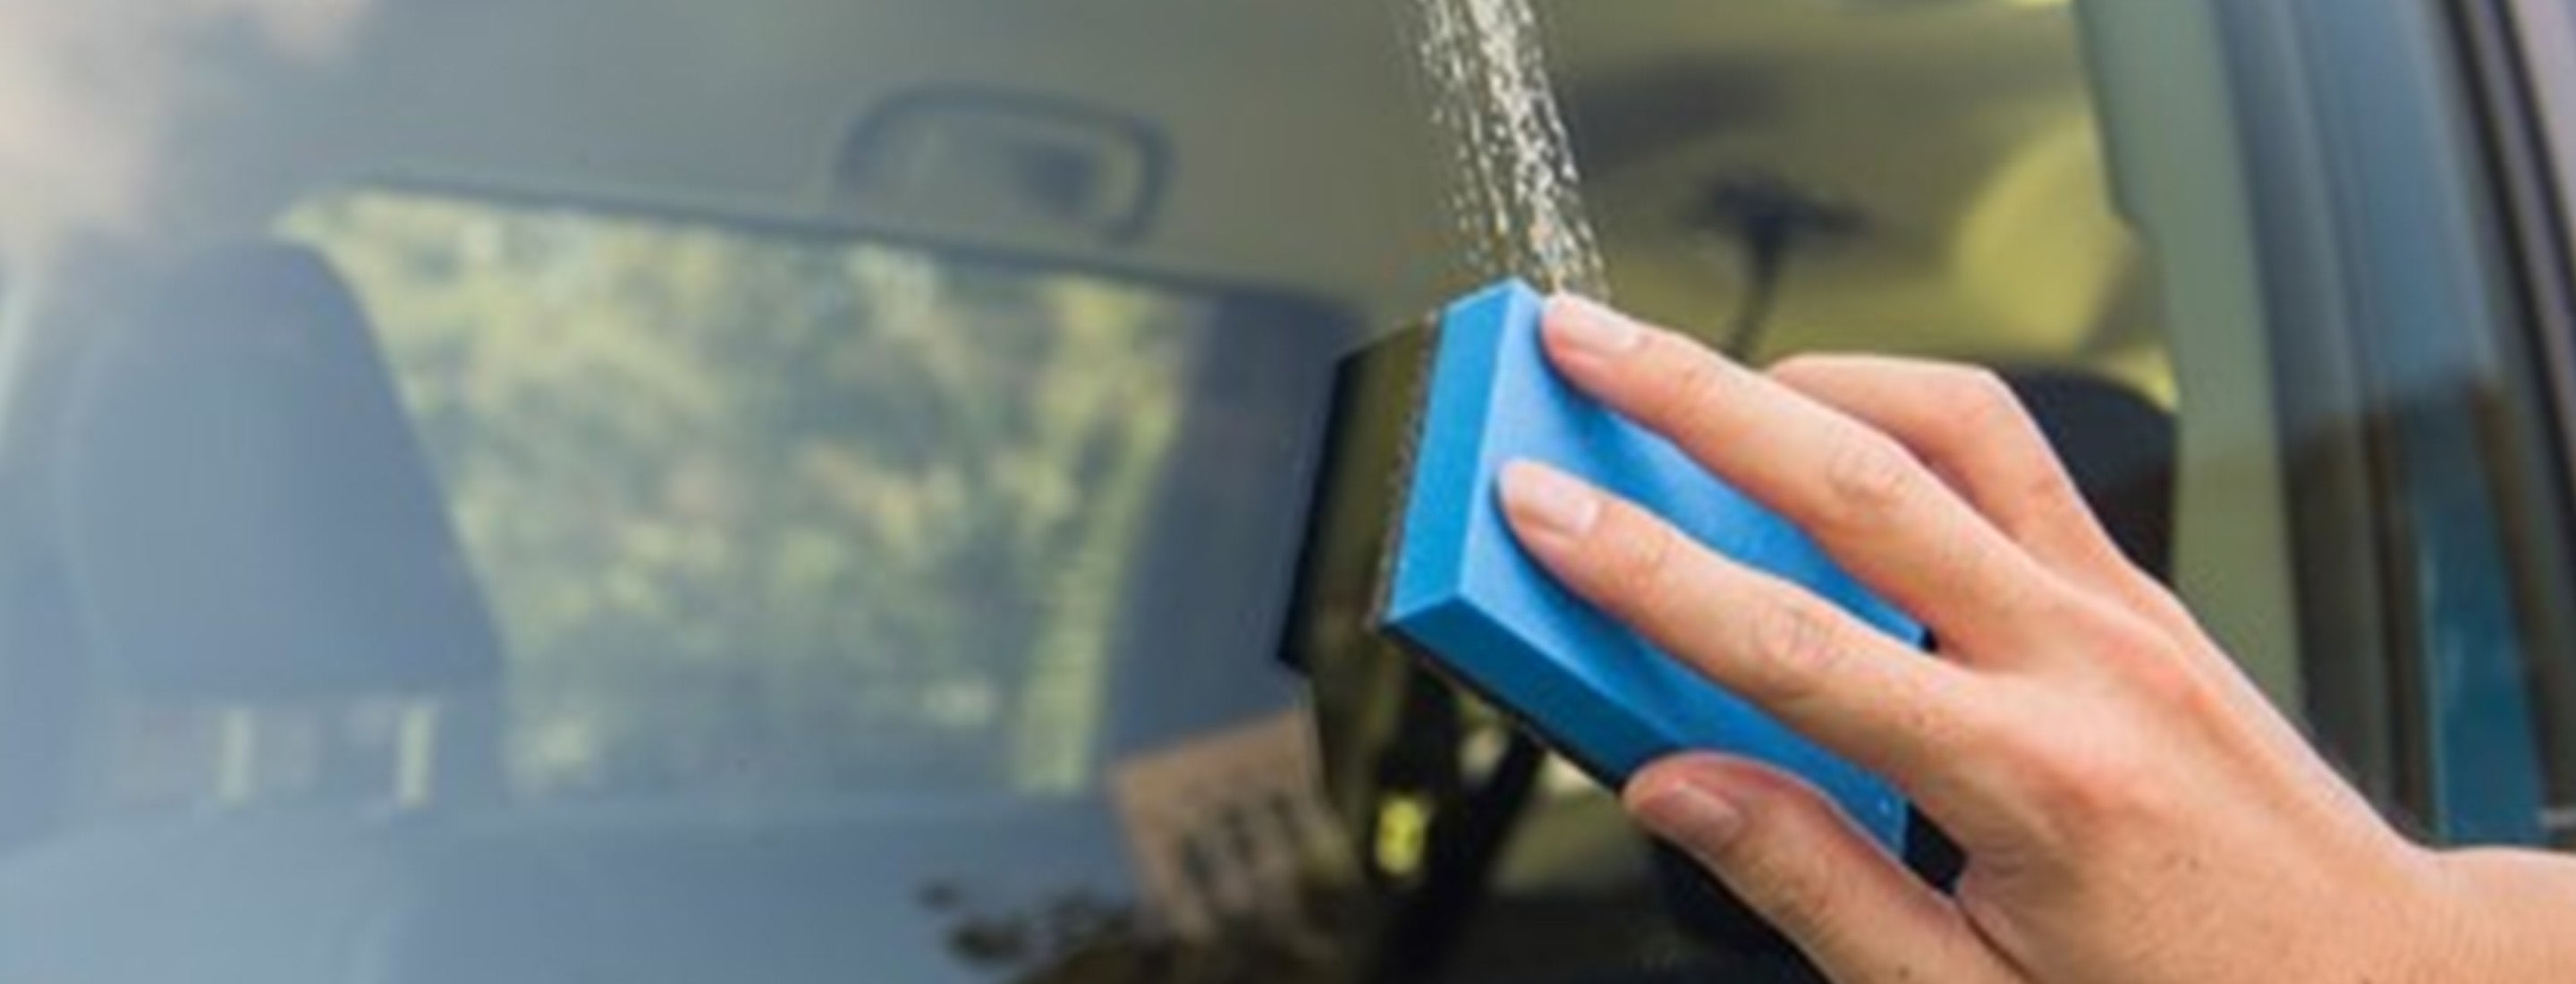 blue sponge being used on a car window 